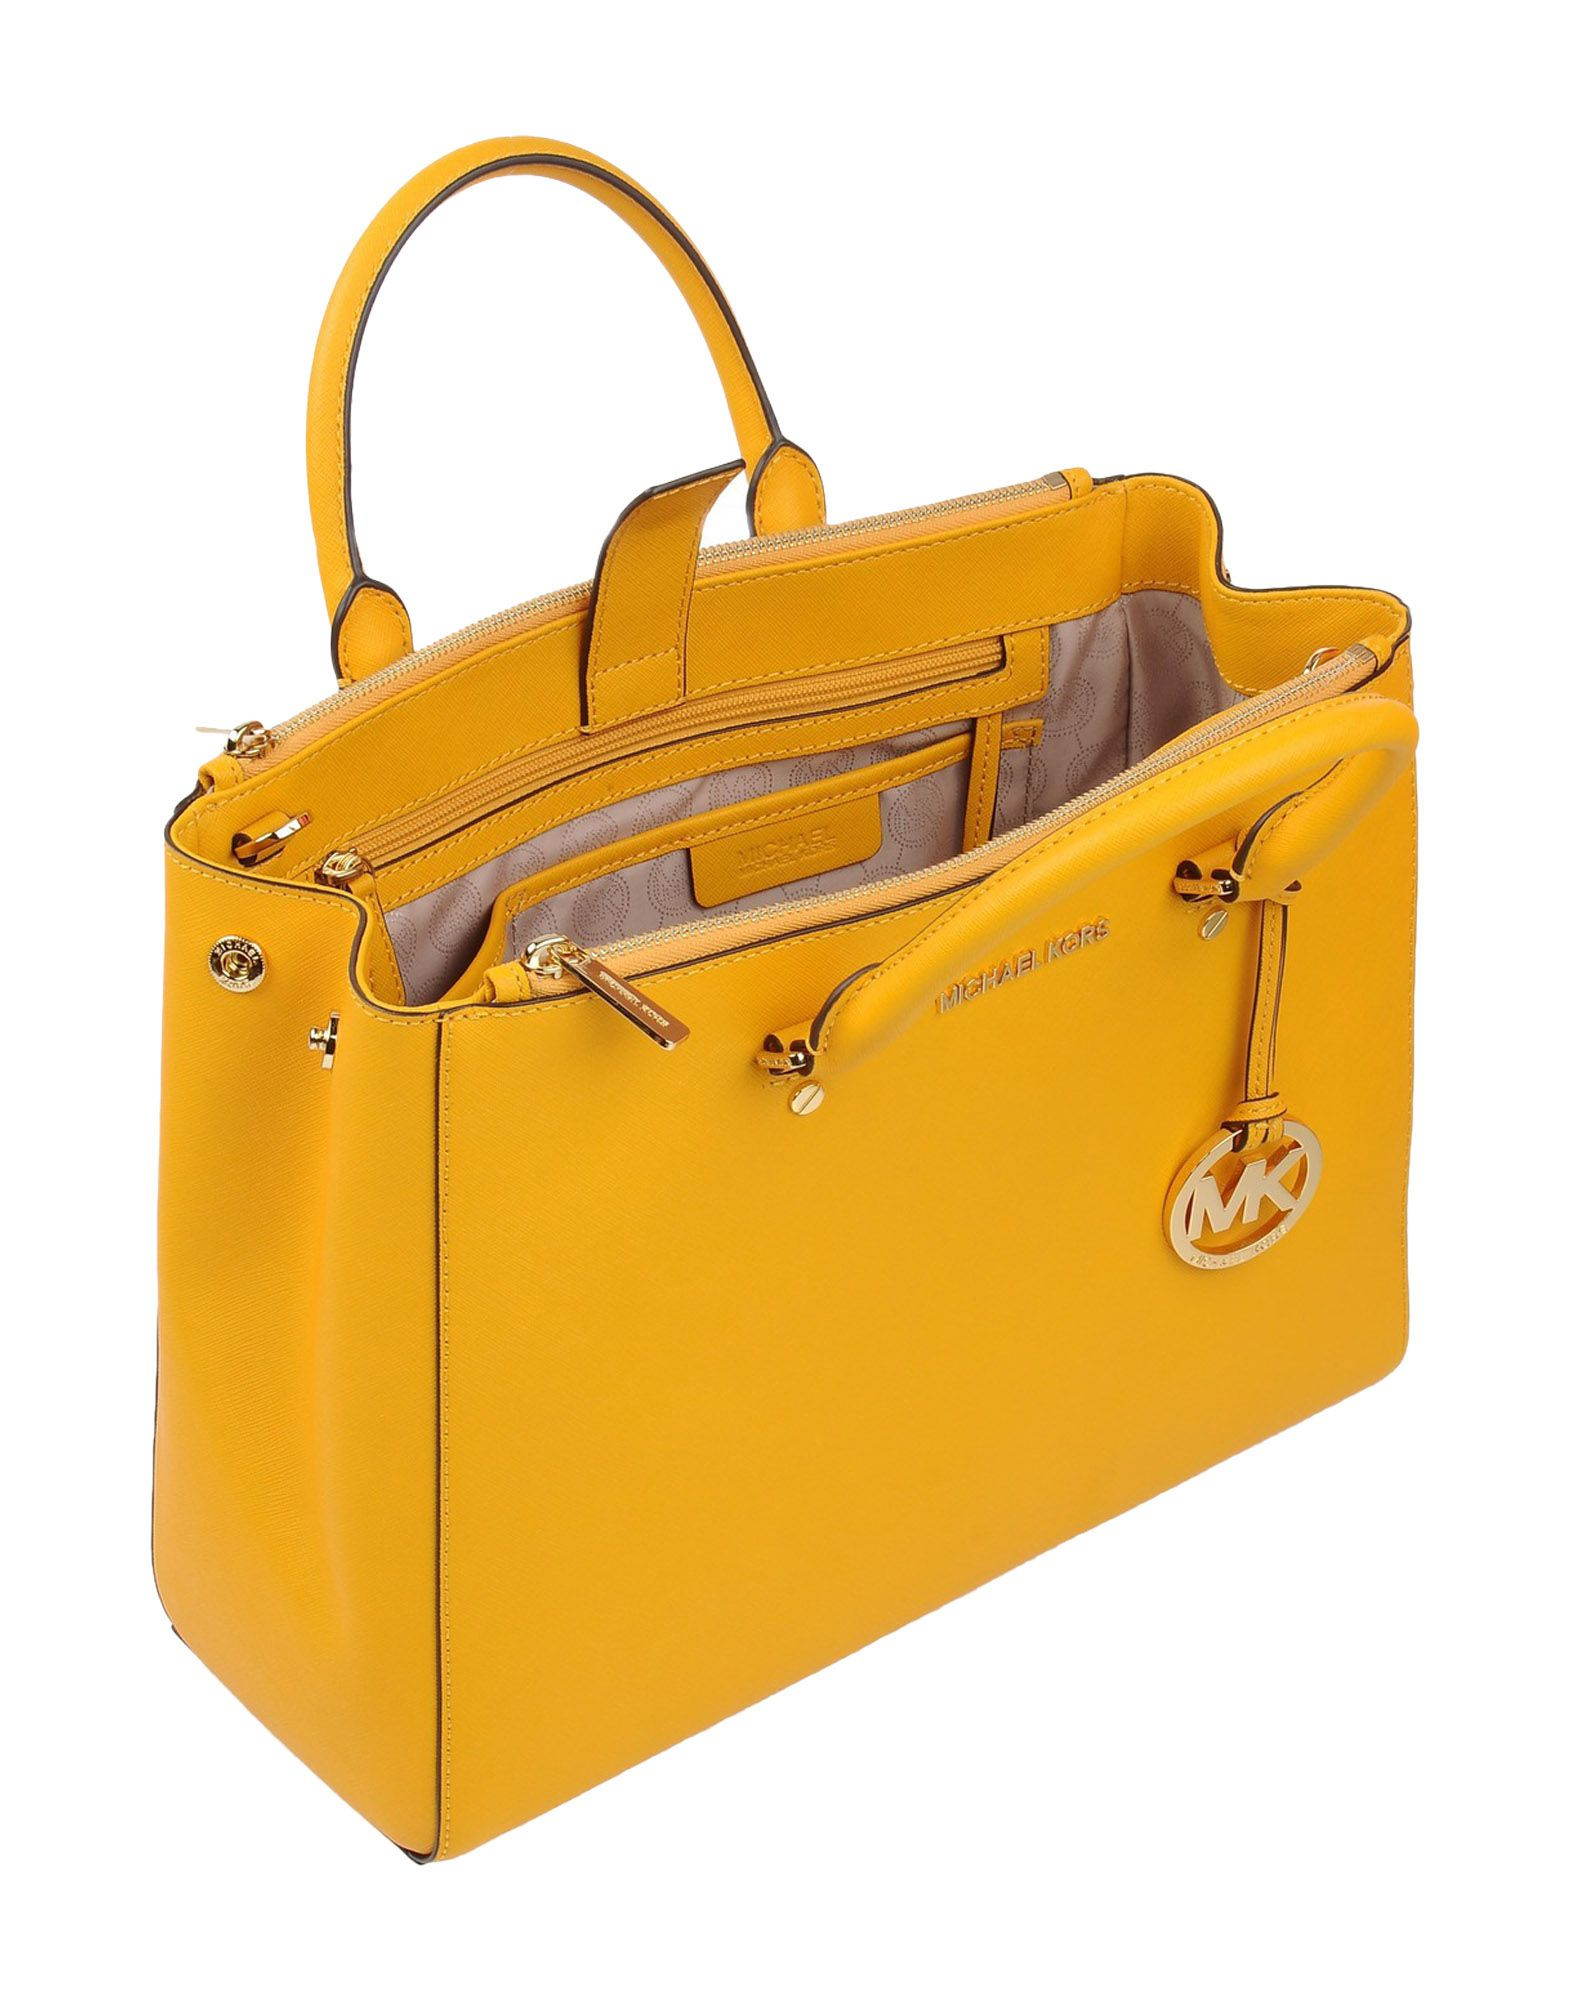 MICHAEL Michael Kors Handbag in Yellow | Lyst